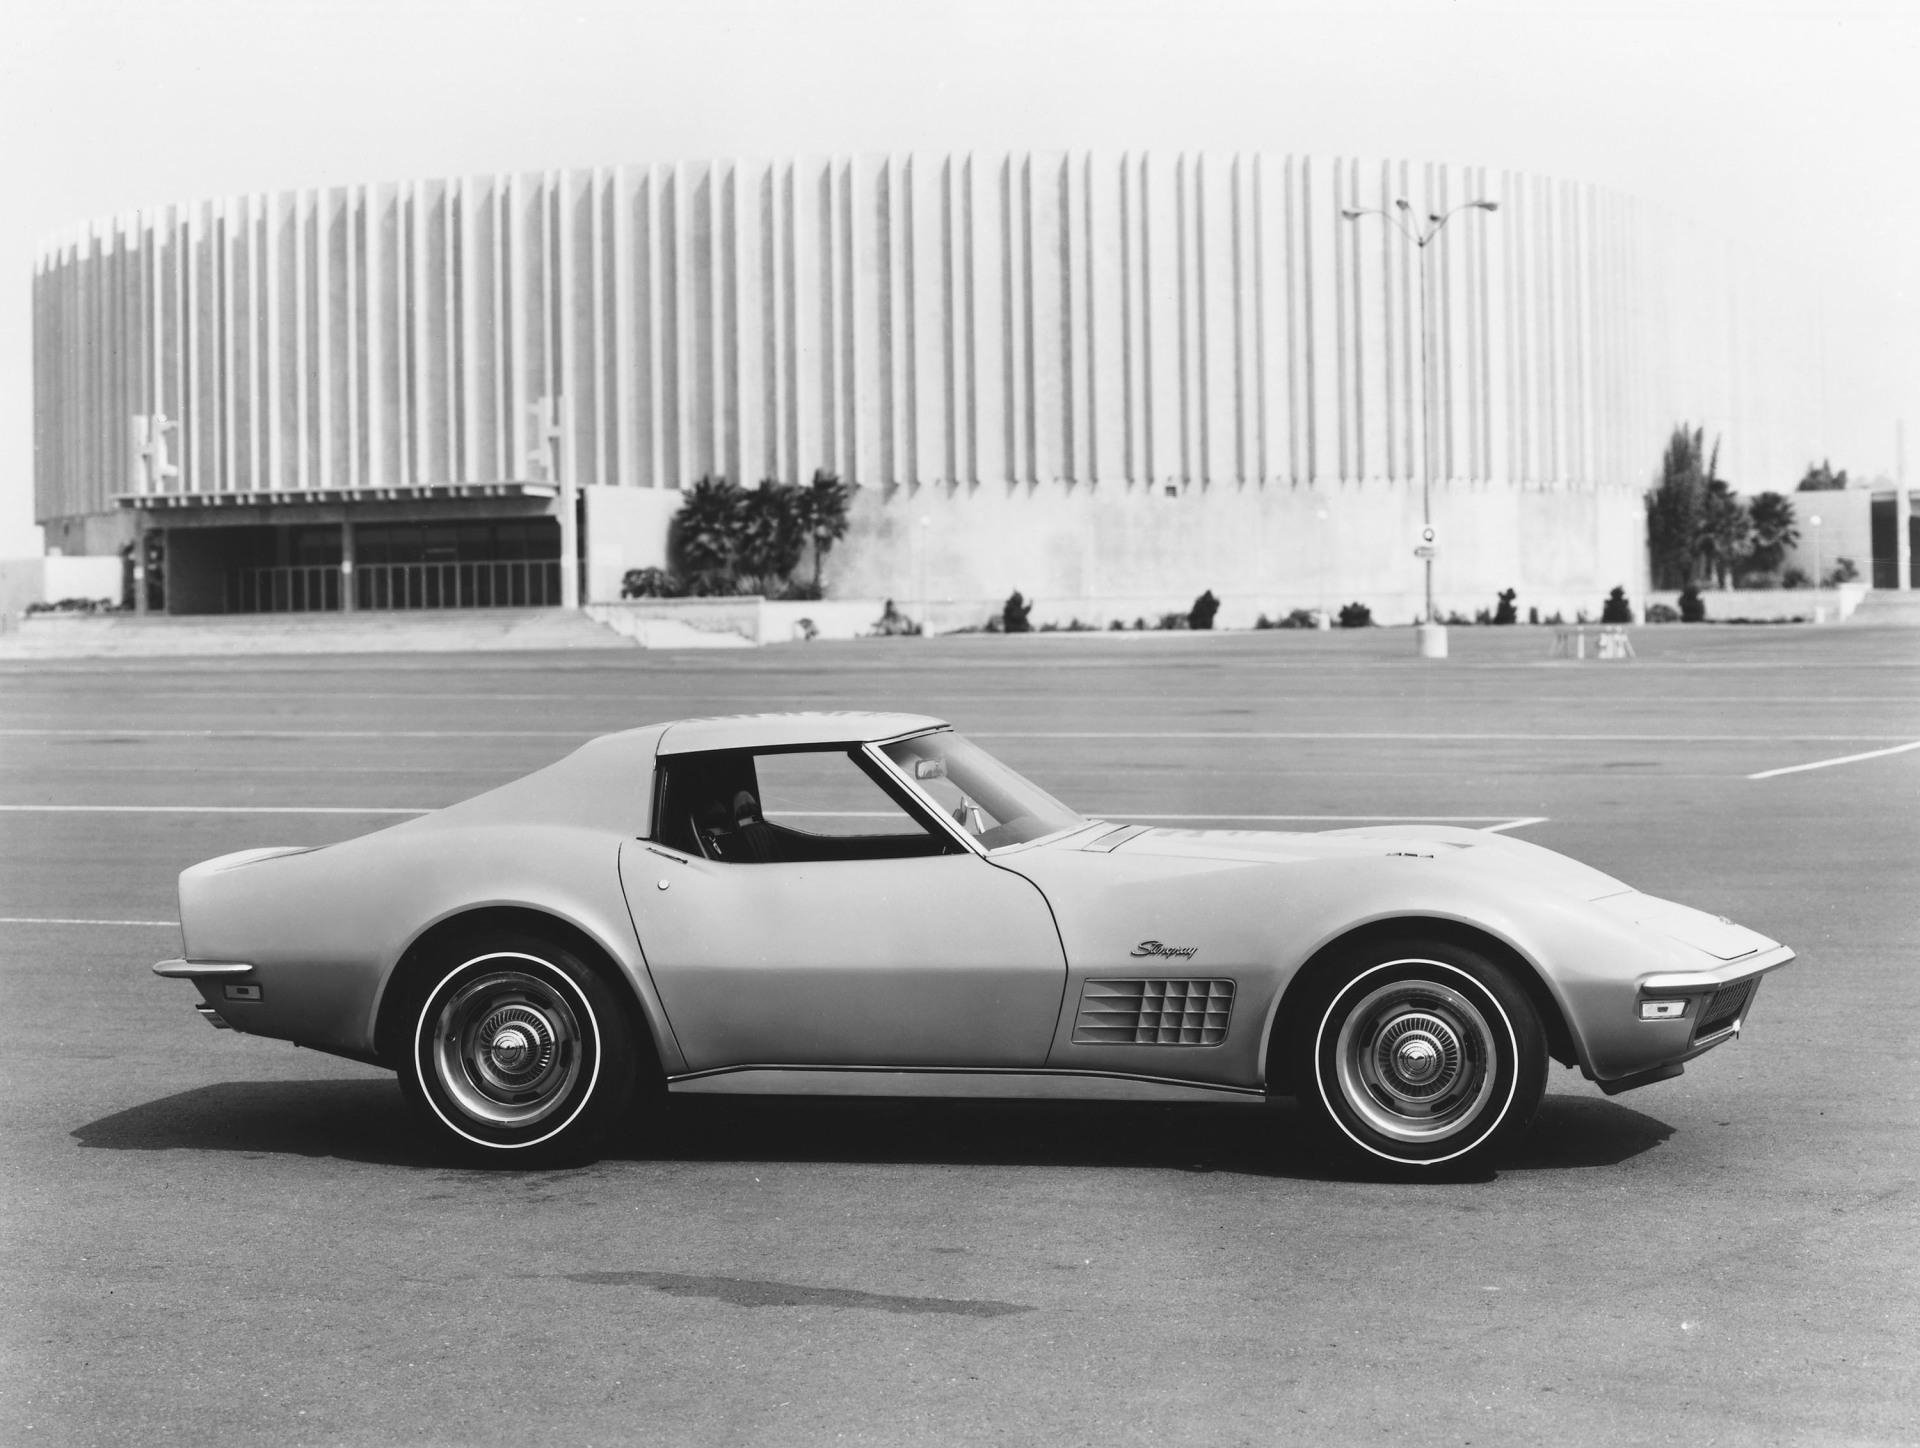 1971 Corvette HD Wallpaper | Background Image | 1920x1448 | ID:331189